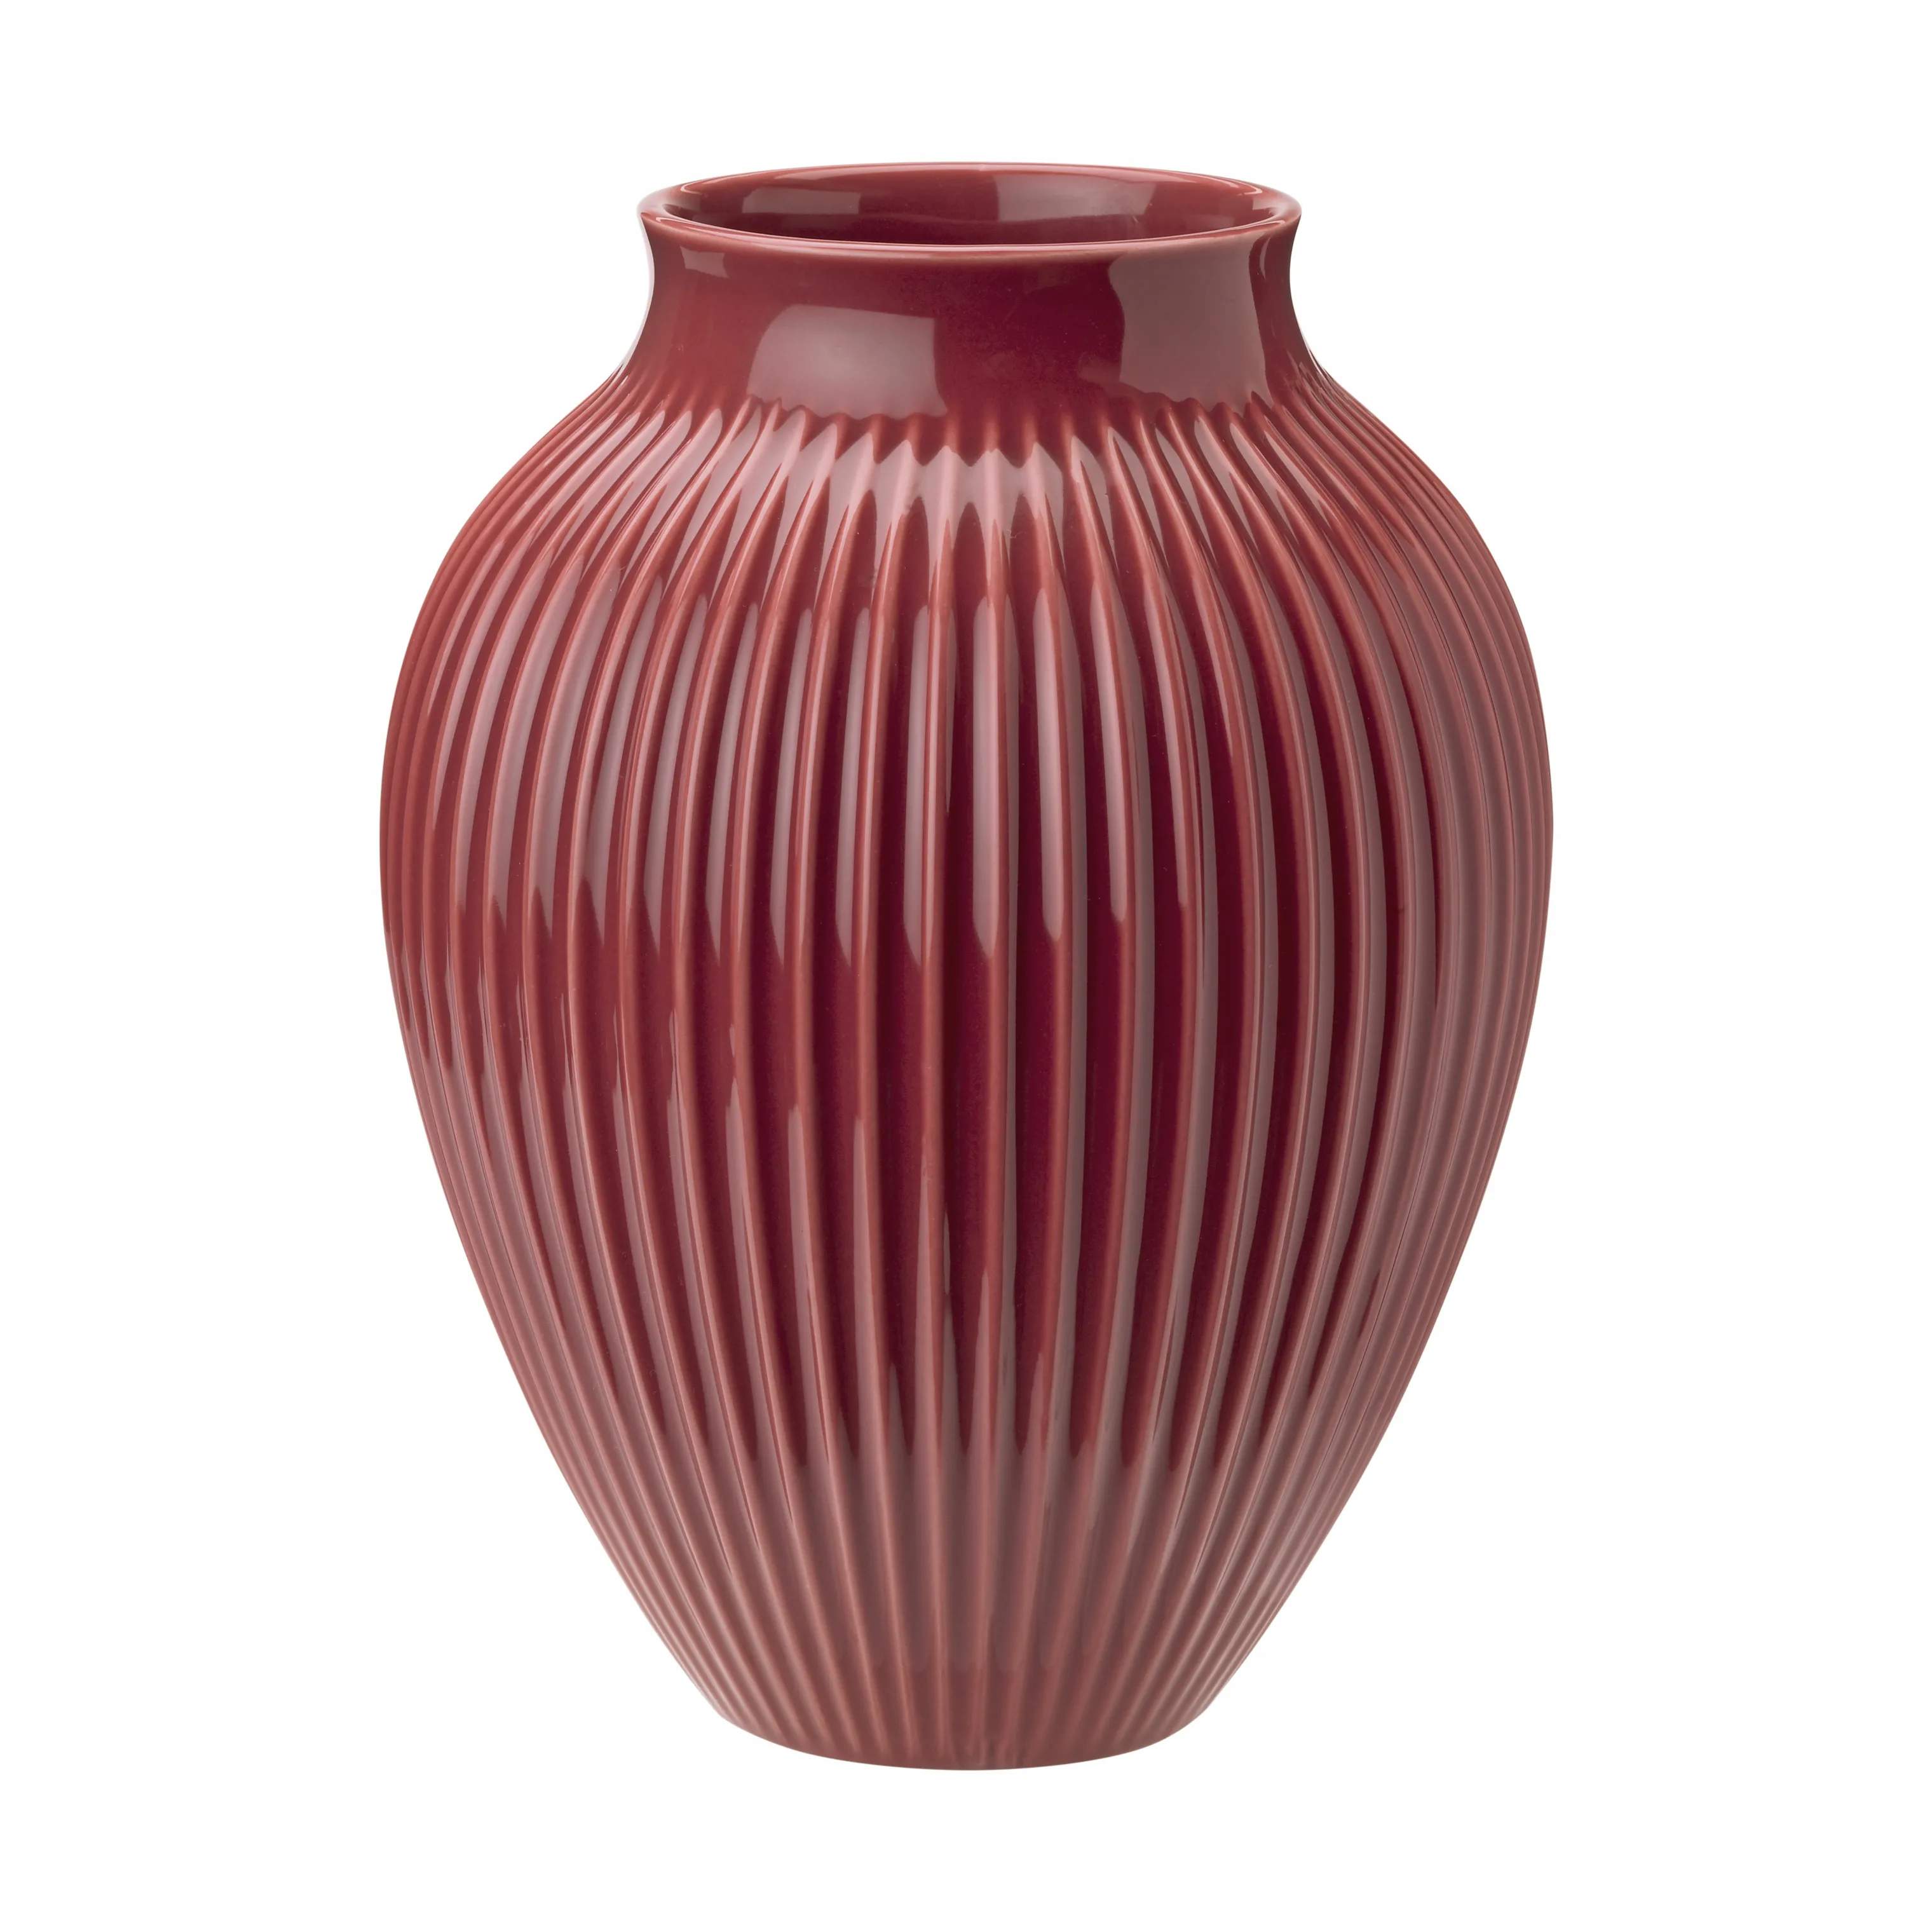 Riller Vase, bordeaux, large